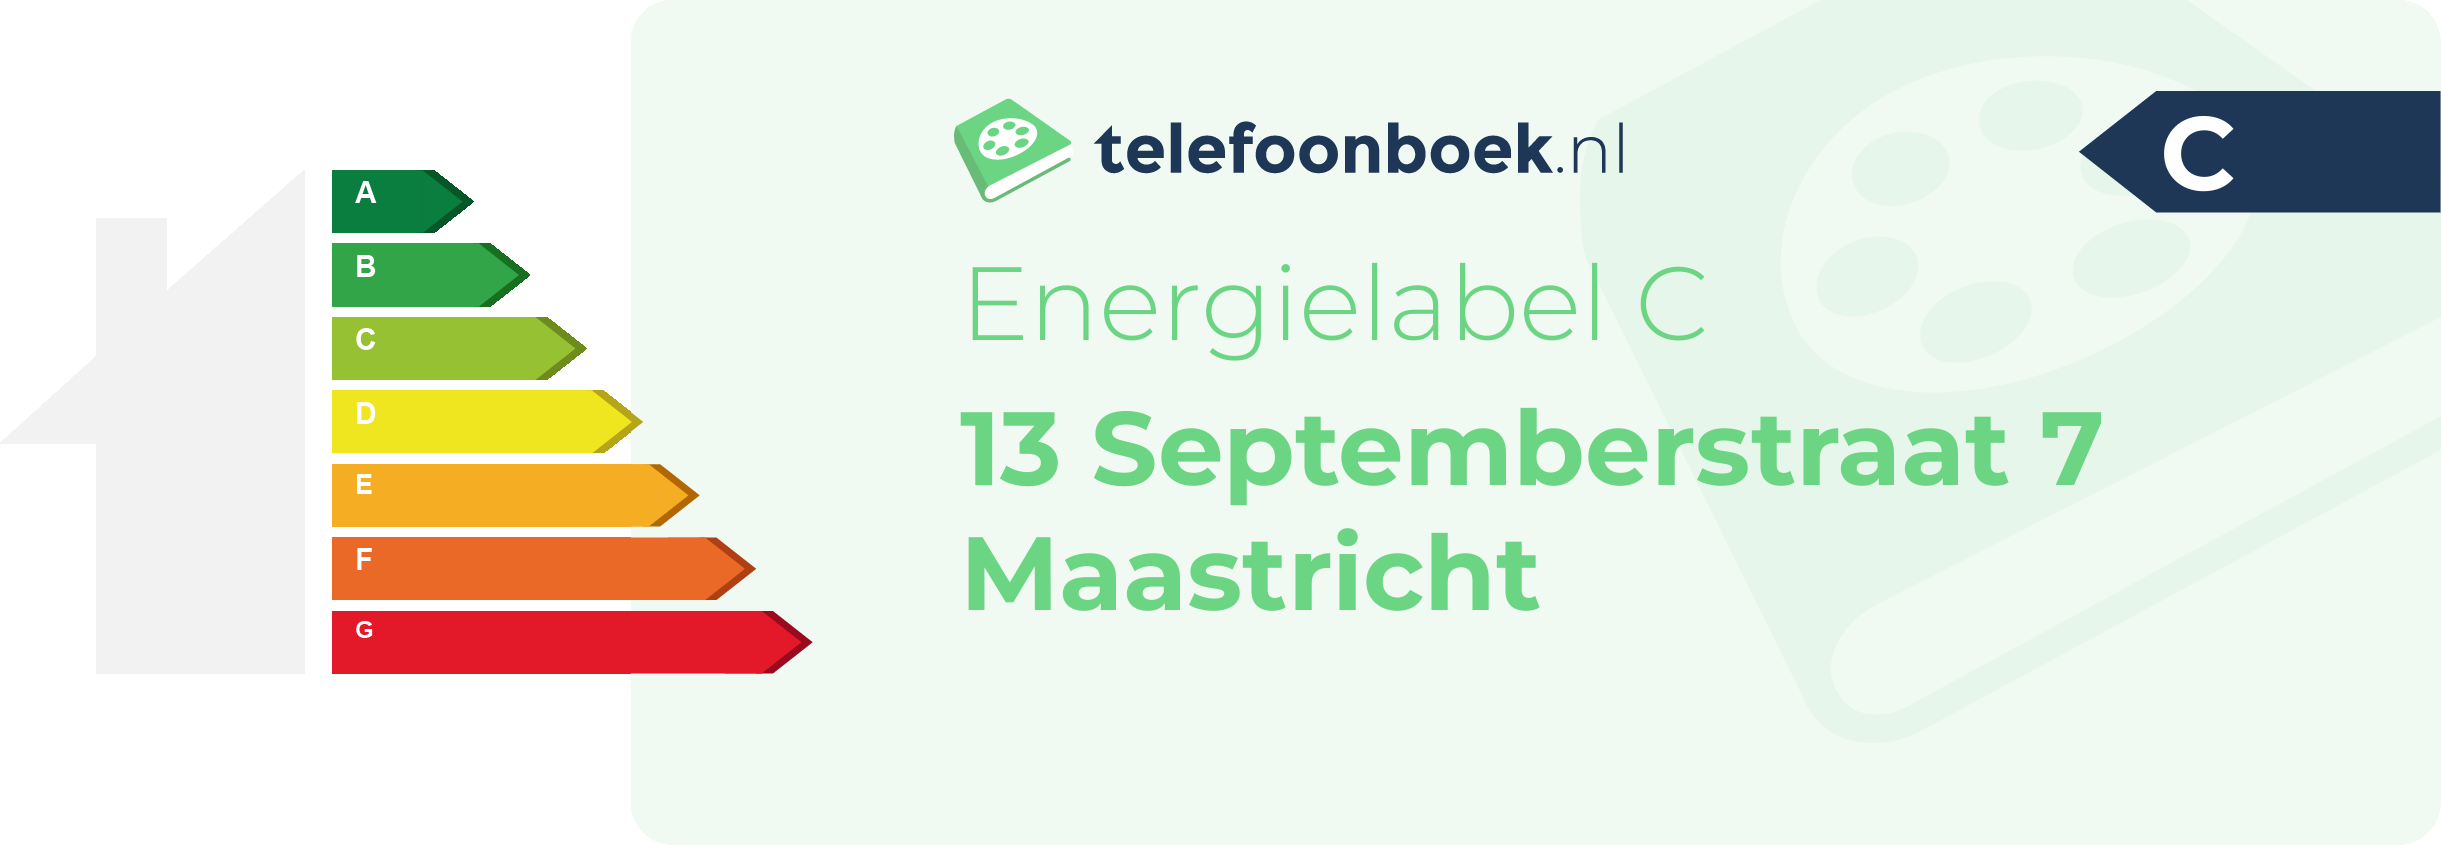 Energielabel 13 Septemberstraat 7 Maastricht